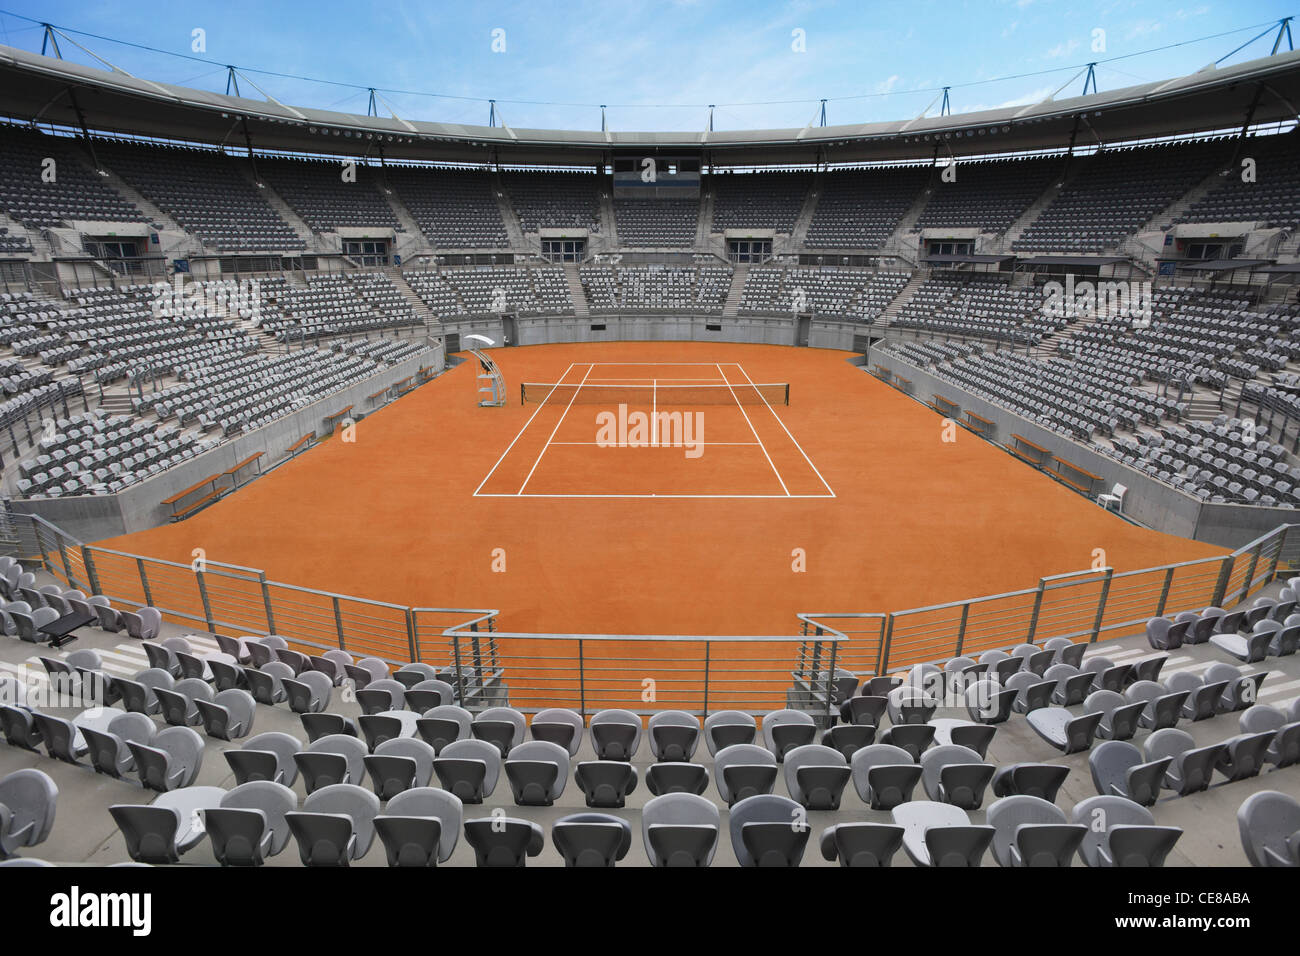 Vista general de la pista de tenis de tierra batida Foto de stock